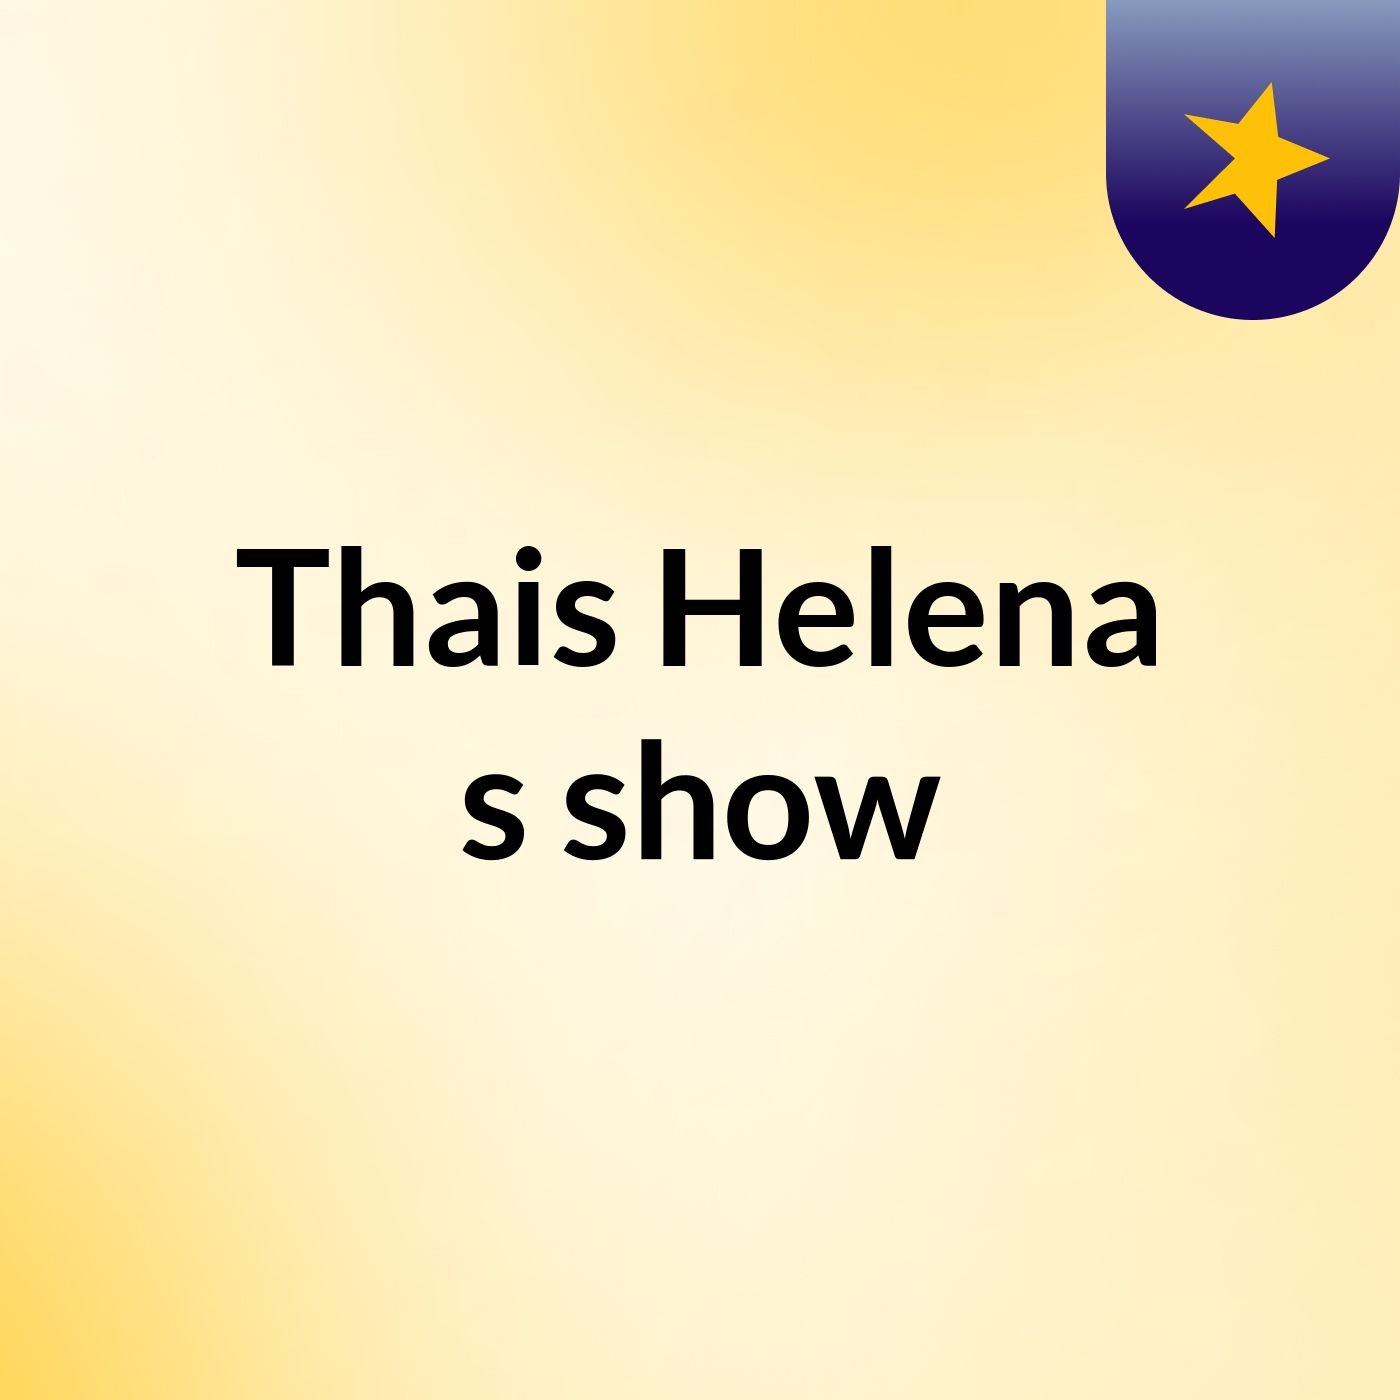 Thais Helena's show